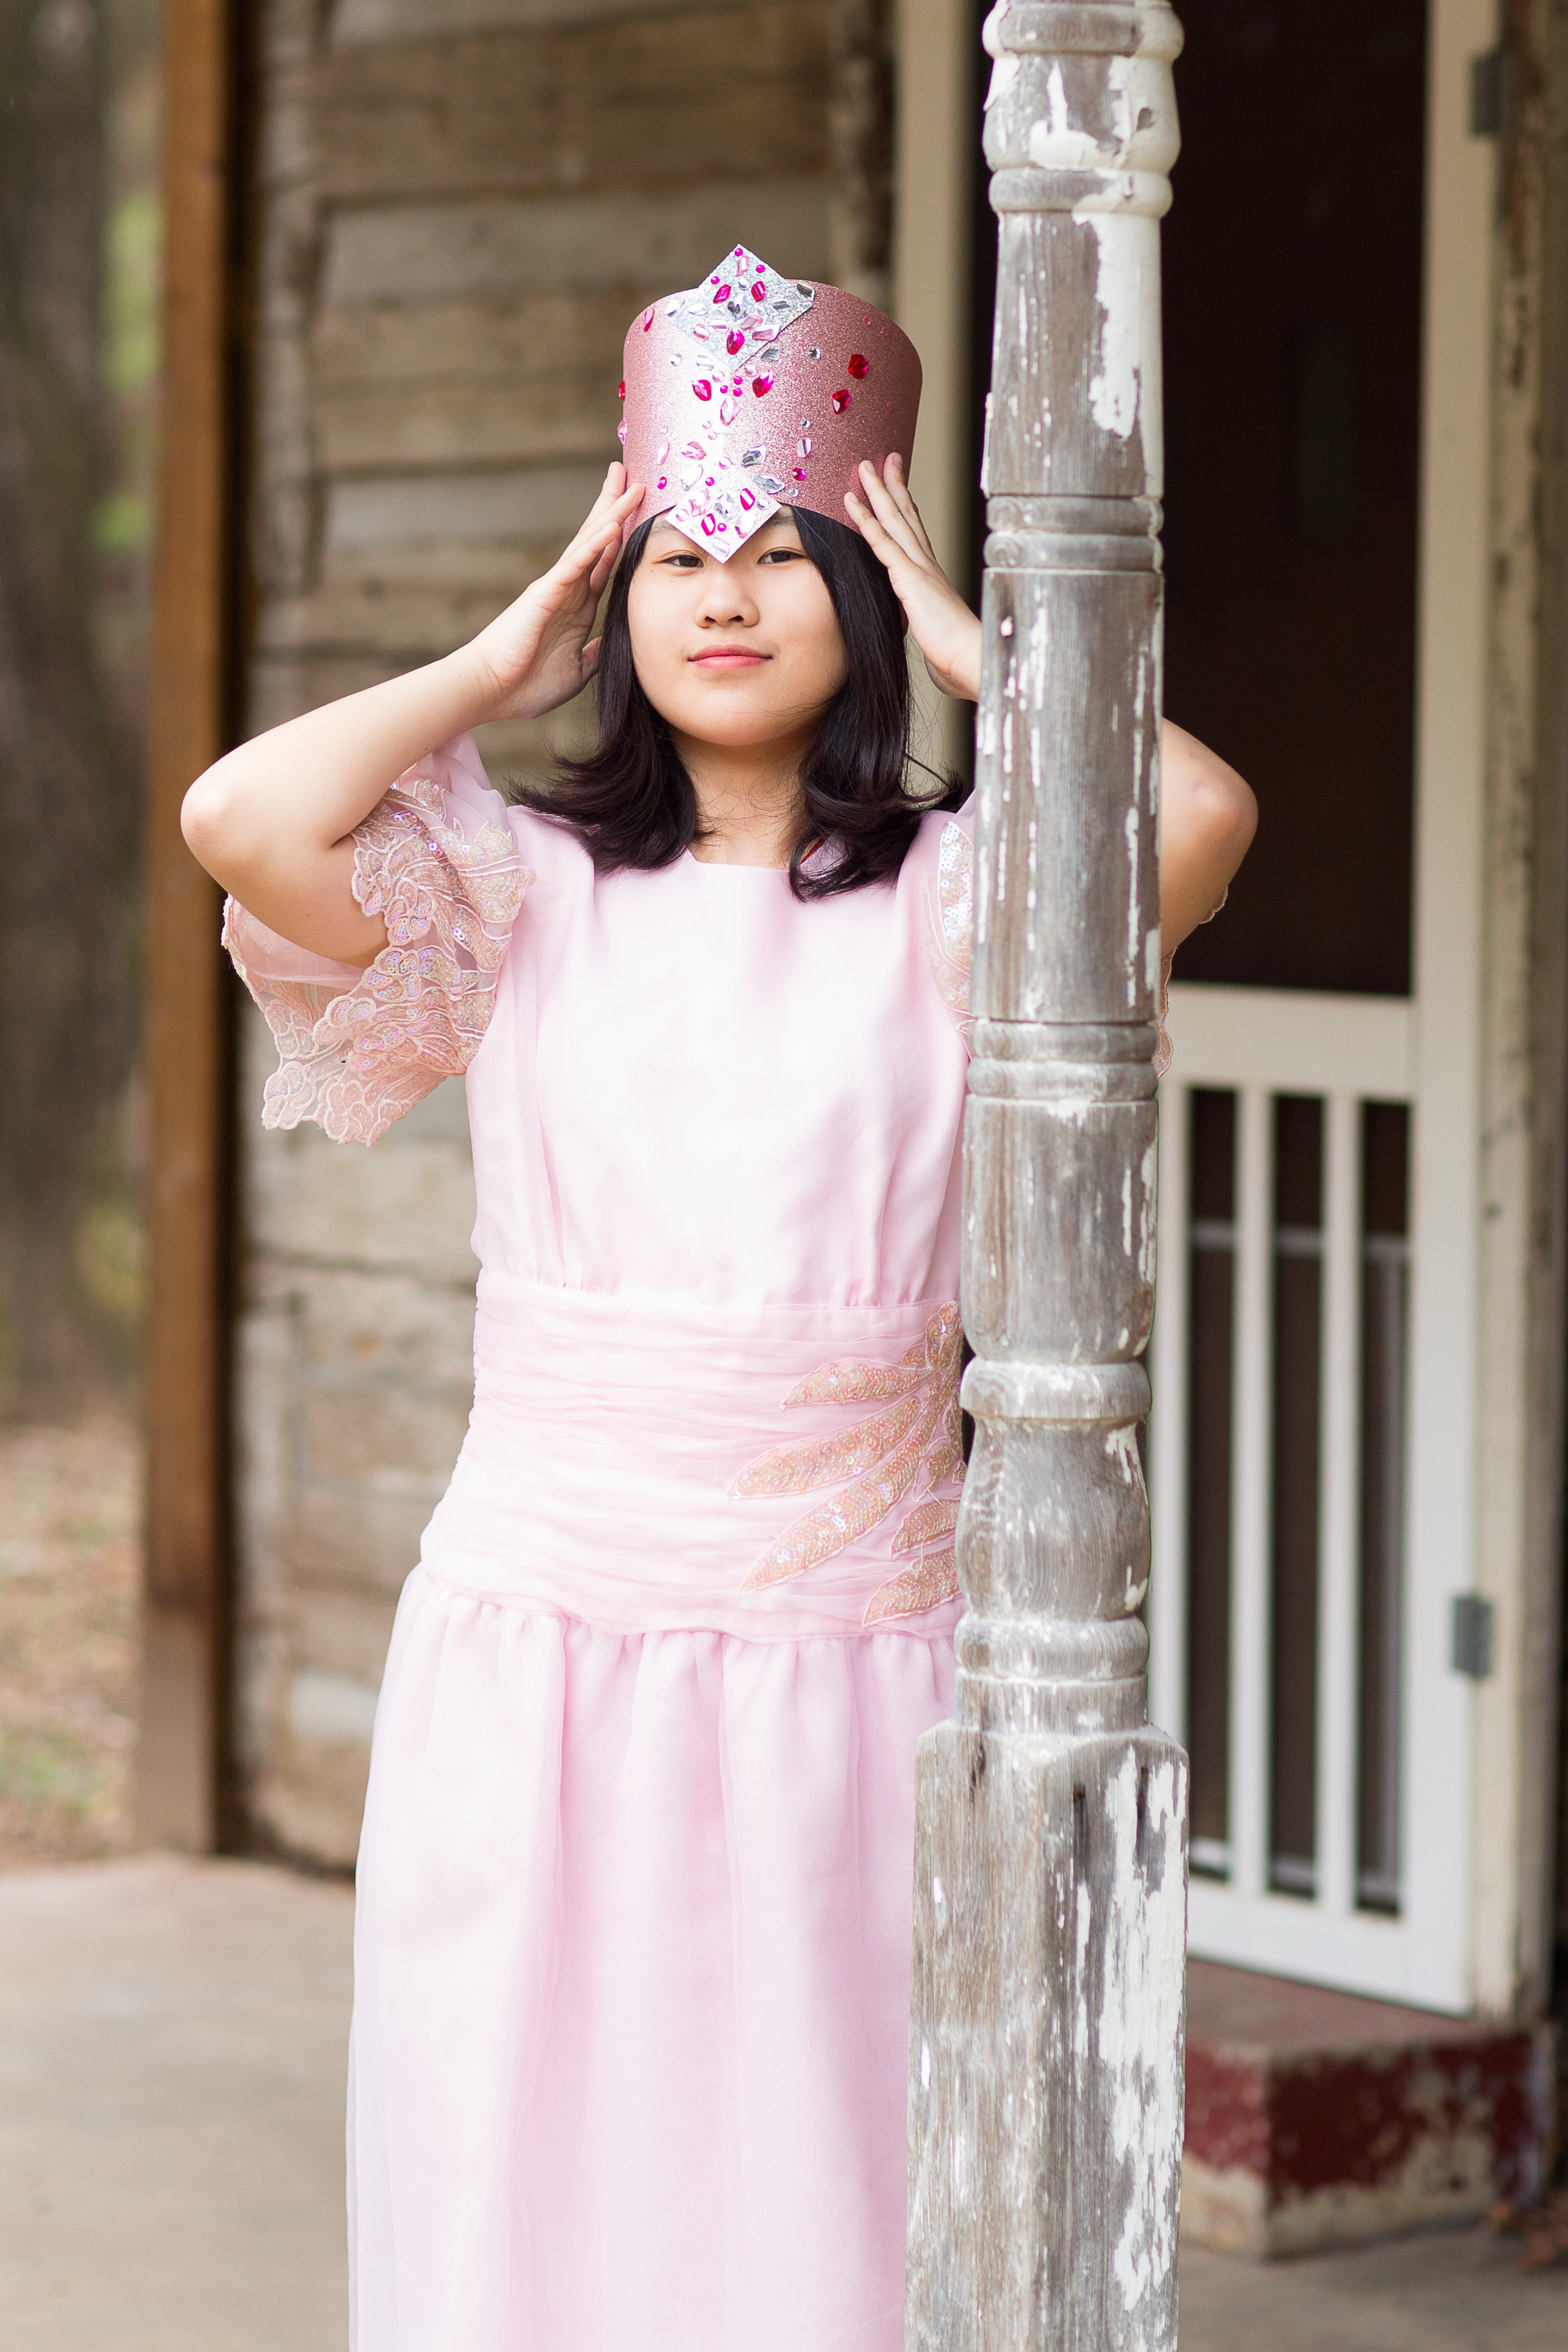 Jenny Jiang as Glinda